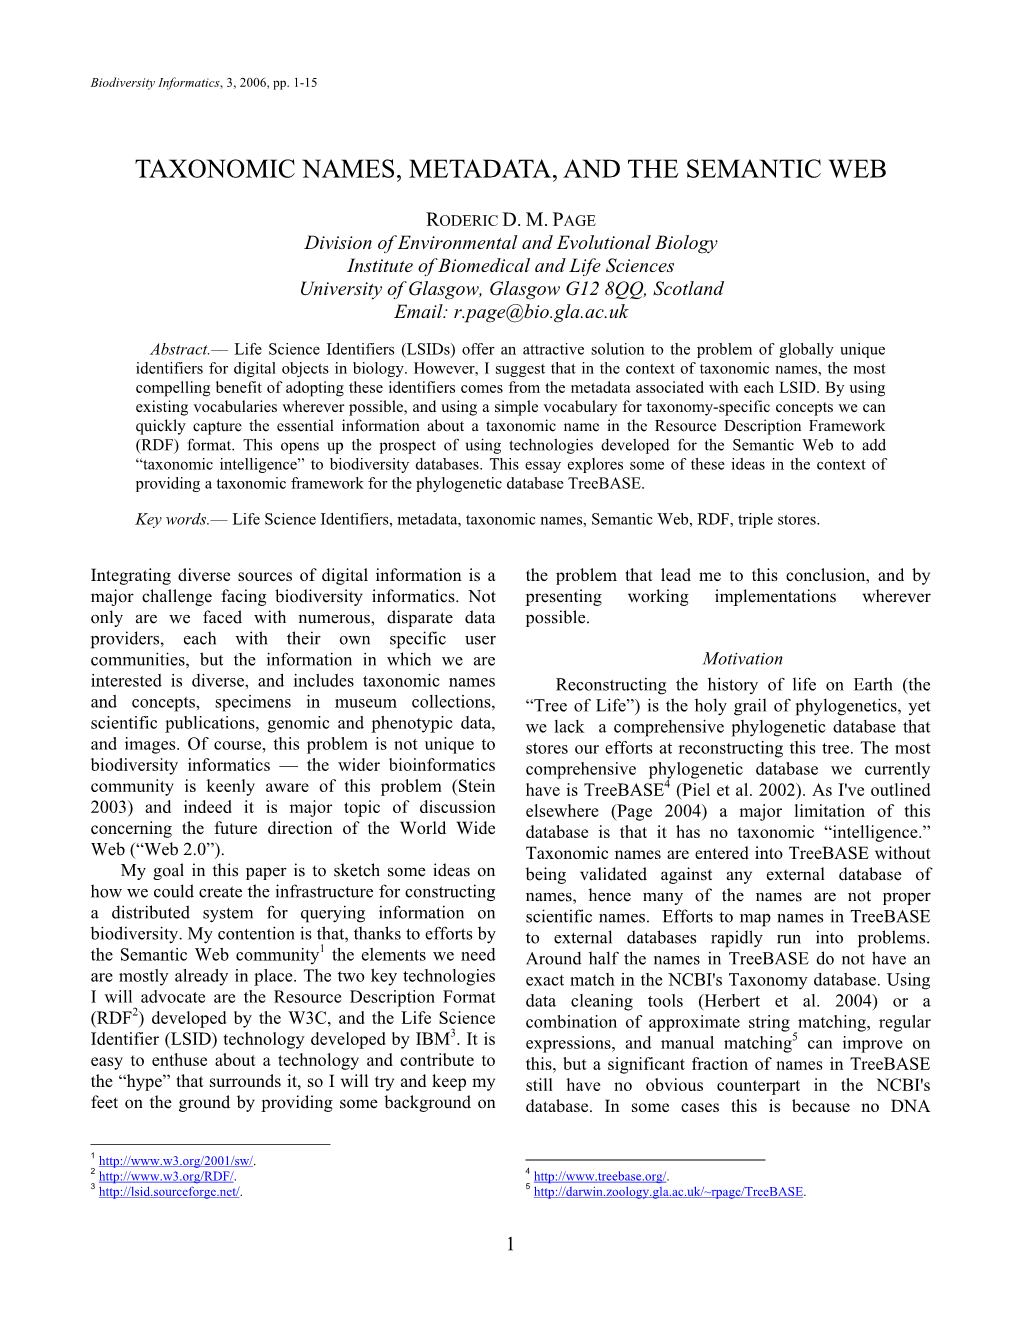 Taxonomic Names, Metadata, and the Semantic Web